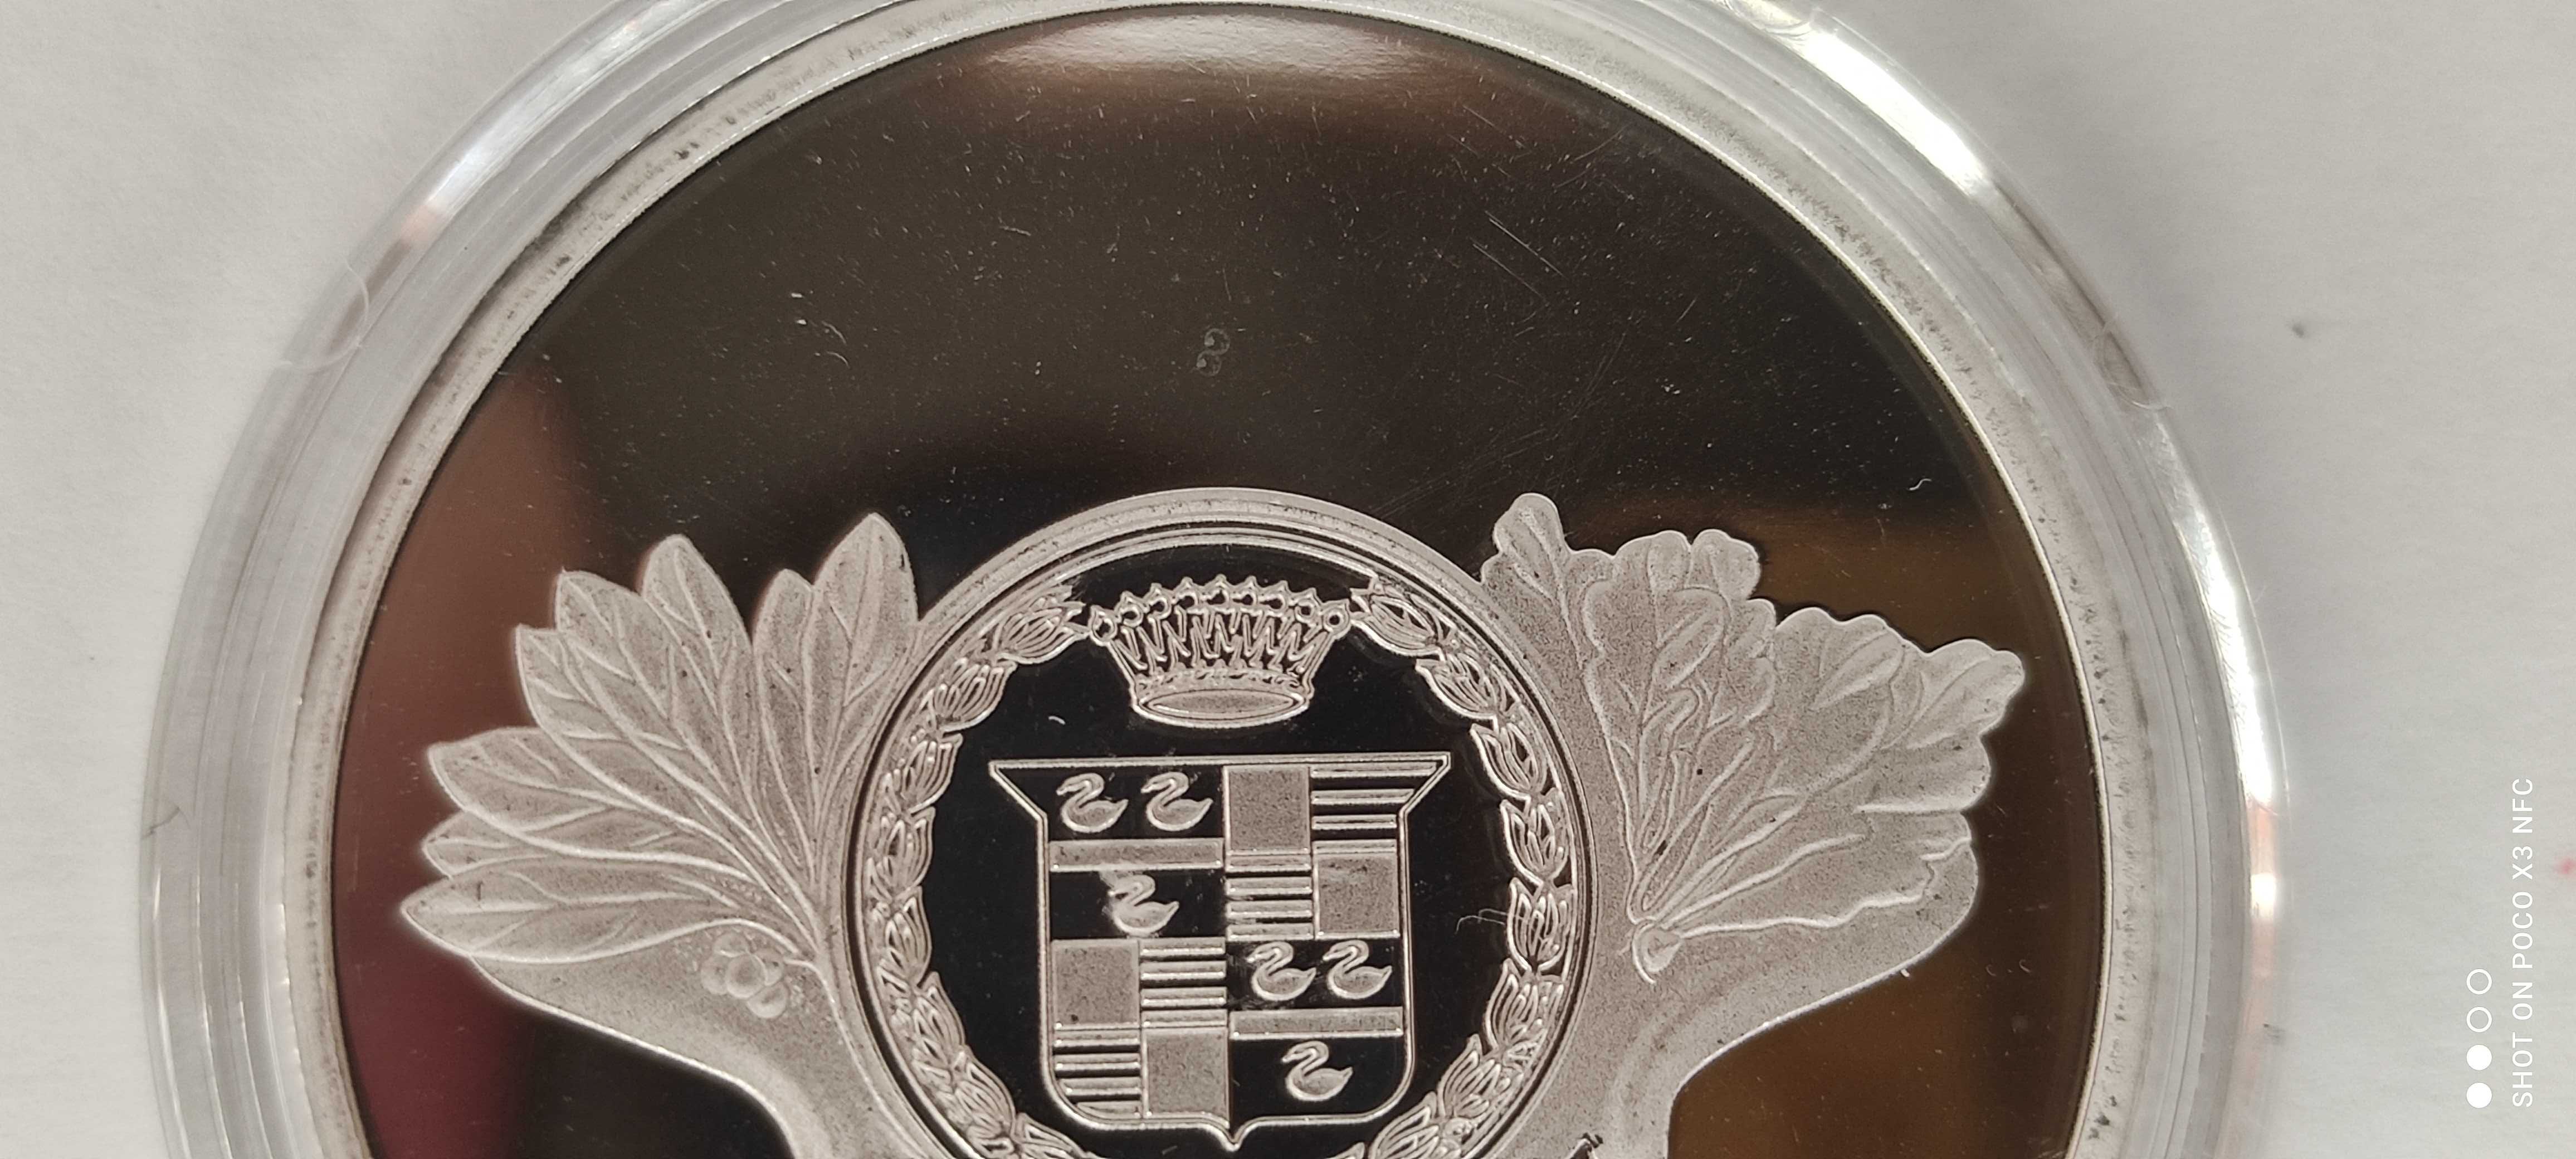 Medal srebrny numizmat USA Cadillac srebro Ag menniczy 999